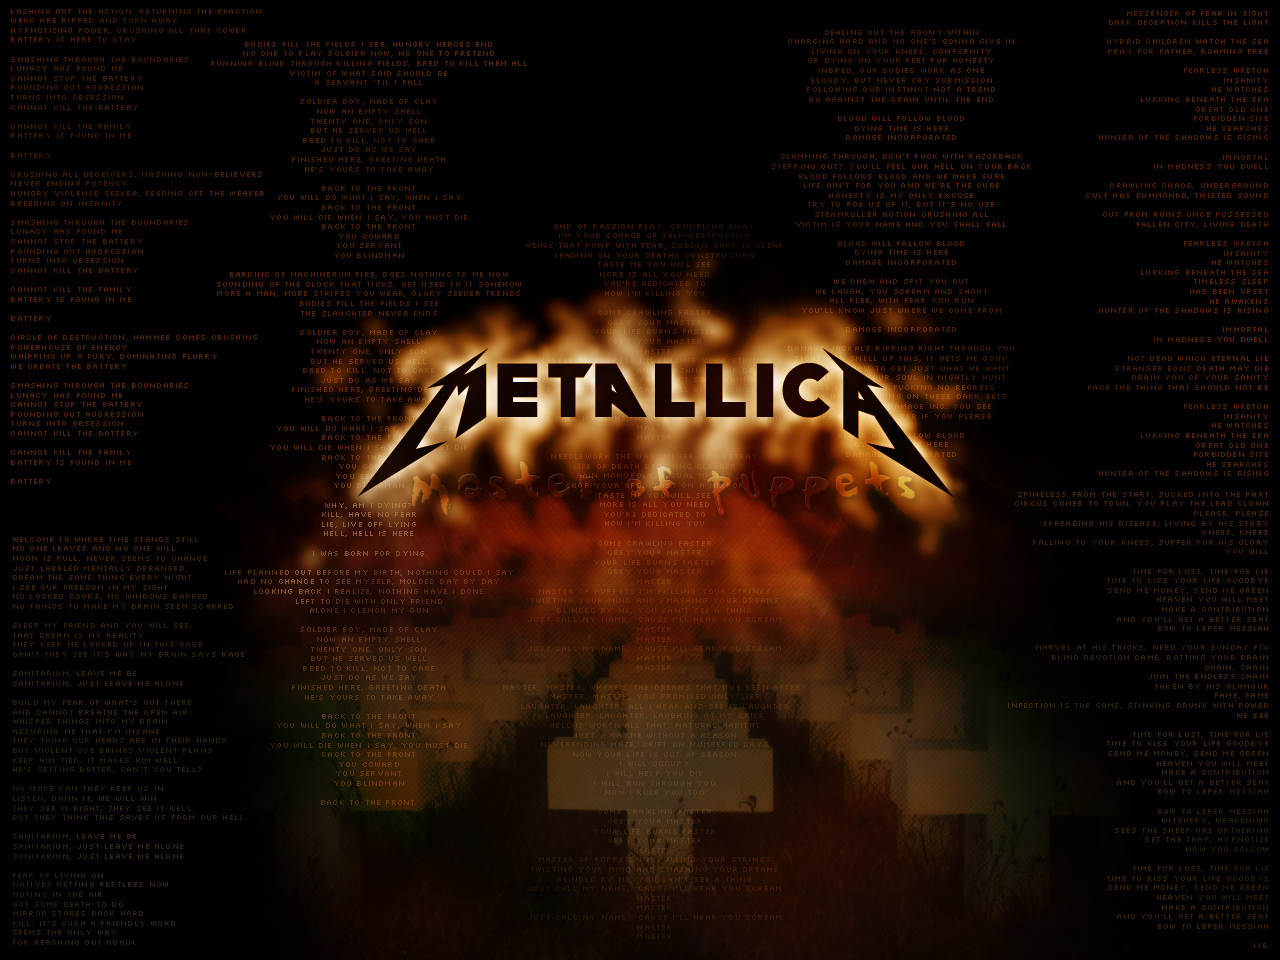 Metallica Wallpaper And Logo